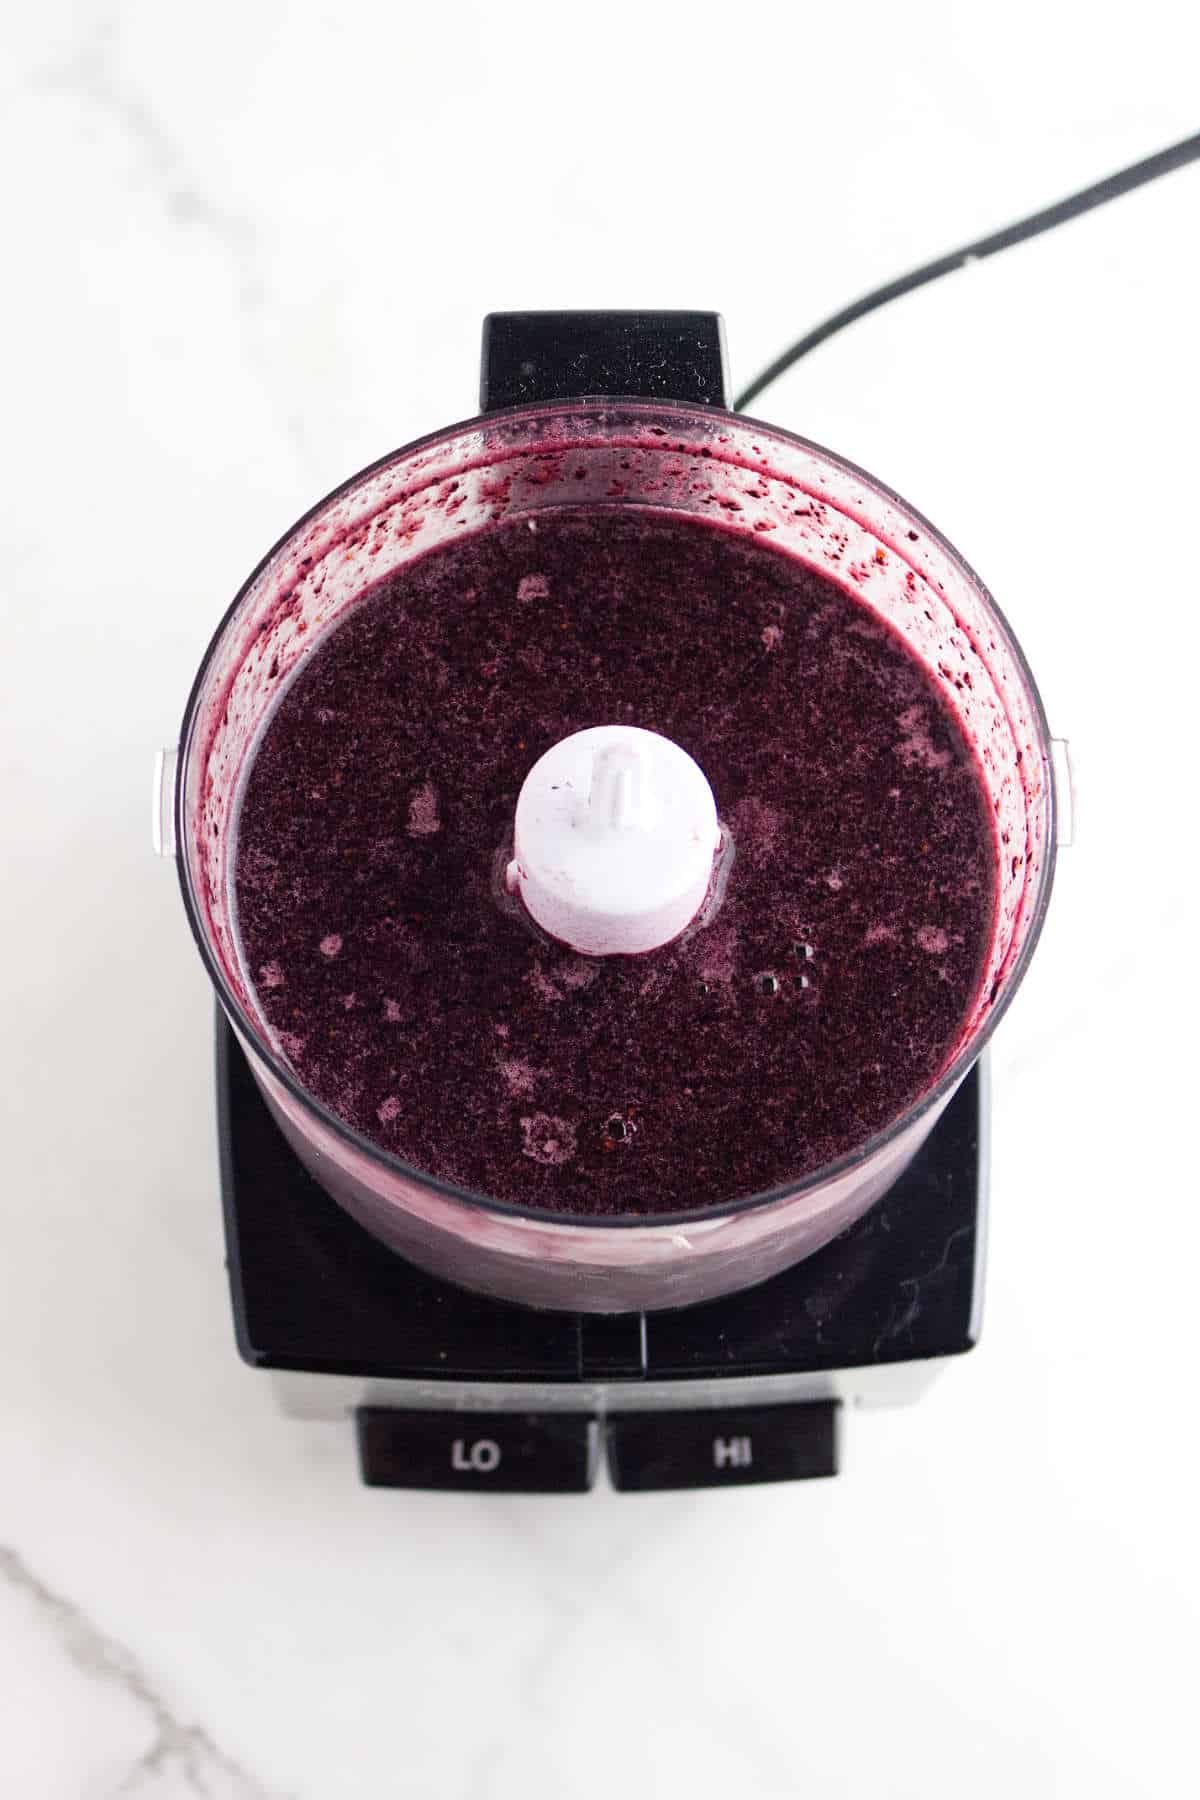 blueberry puree in a mini food processor.